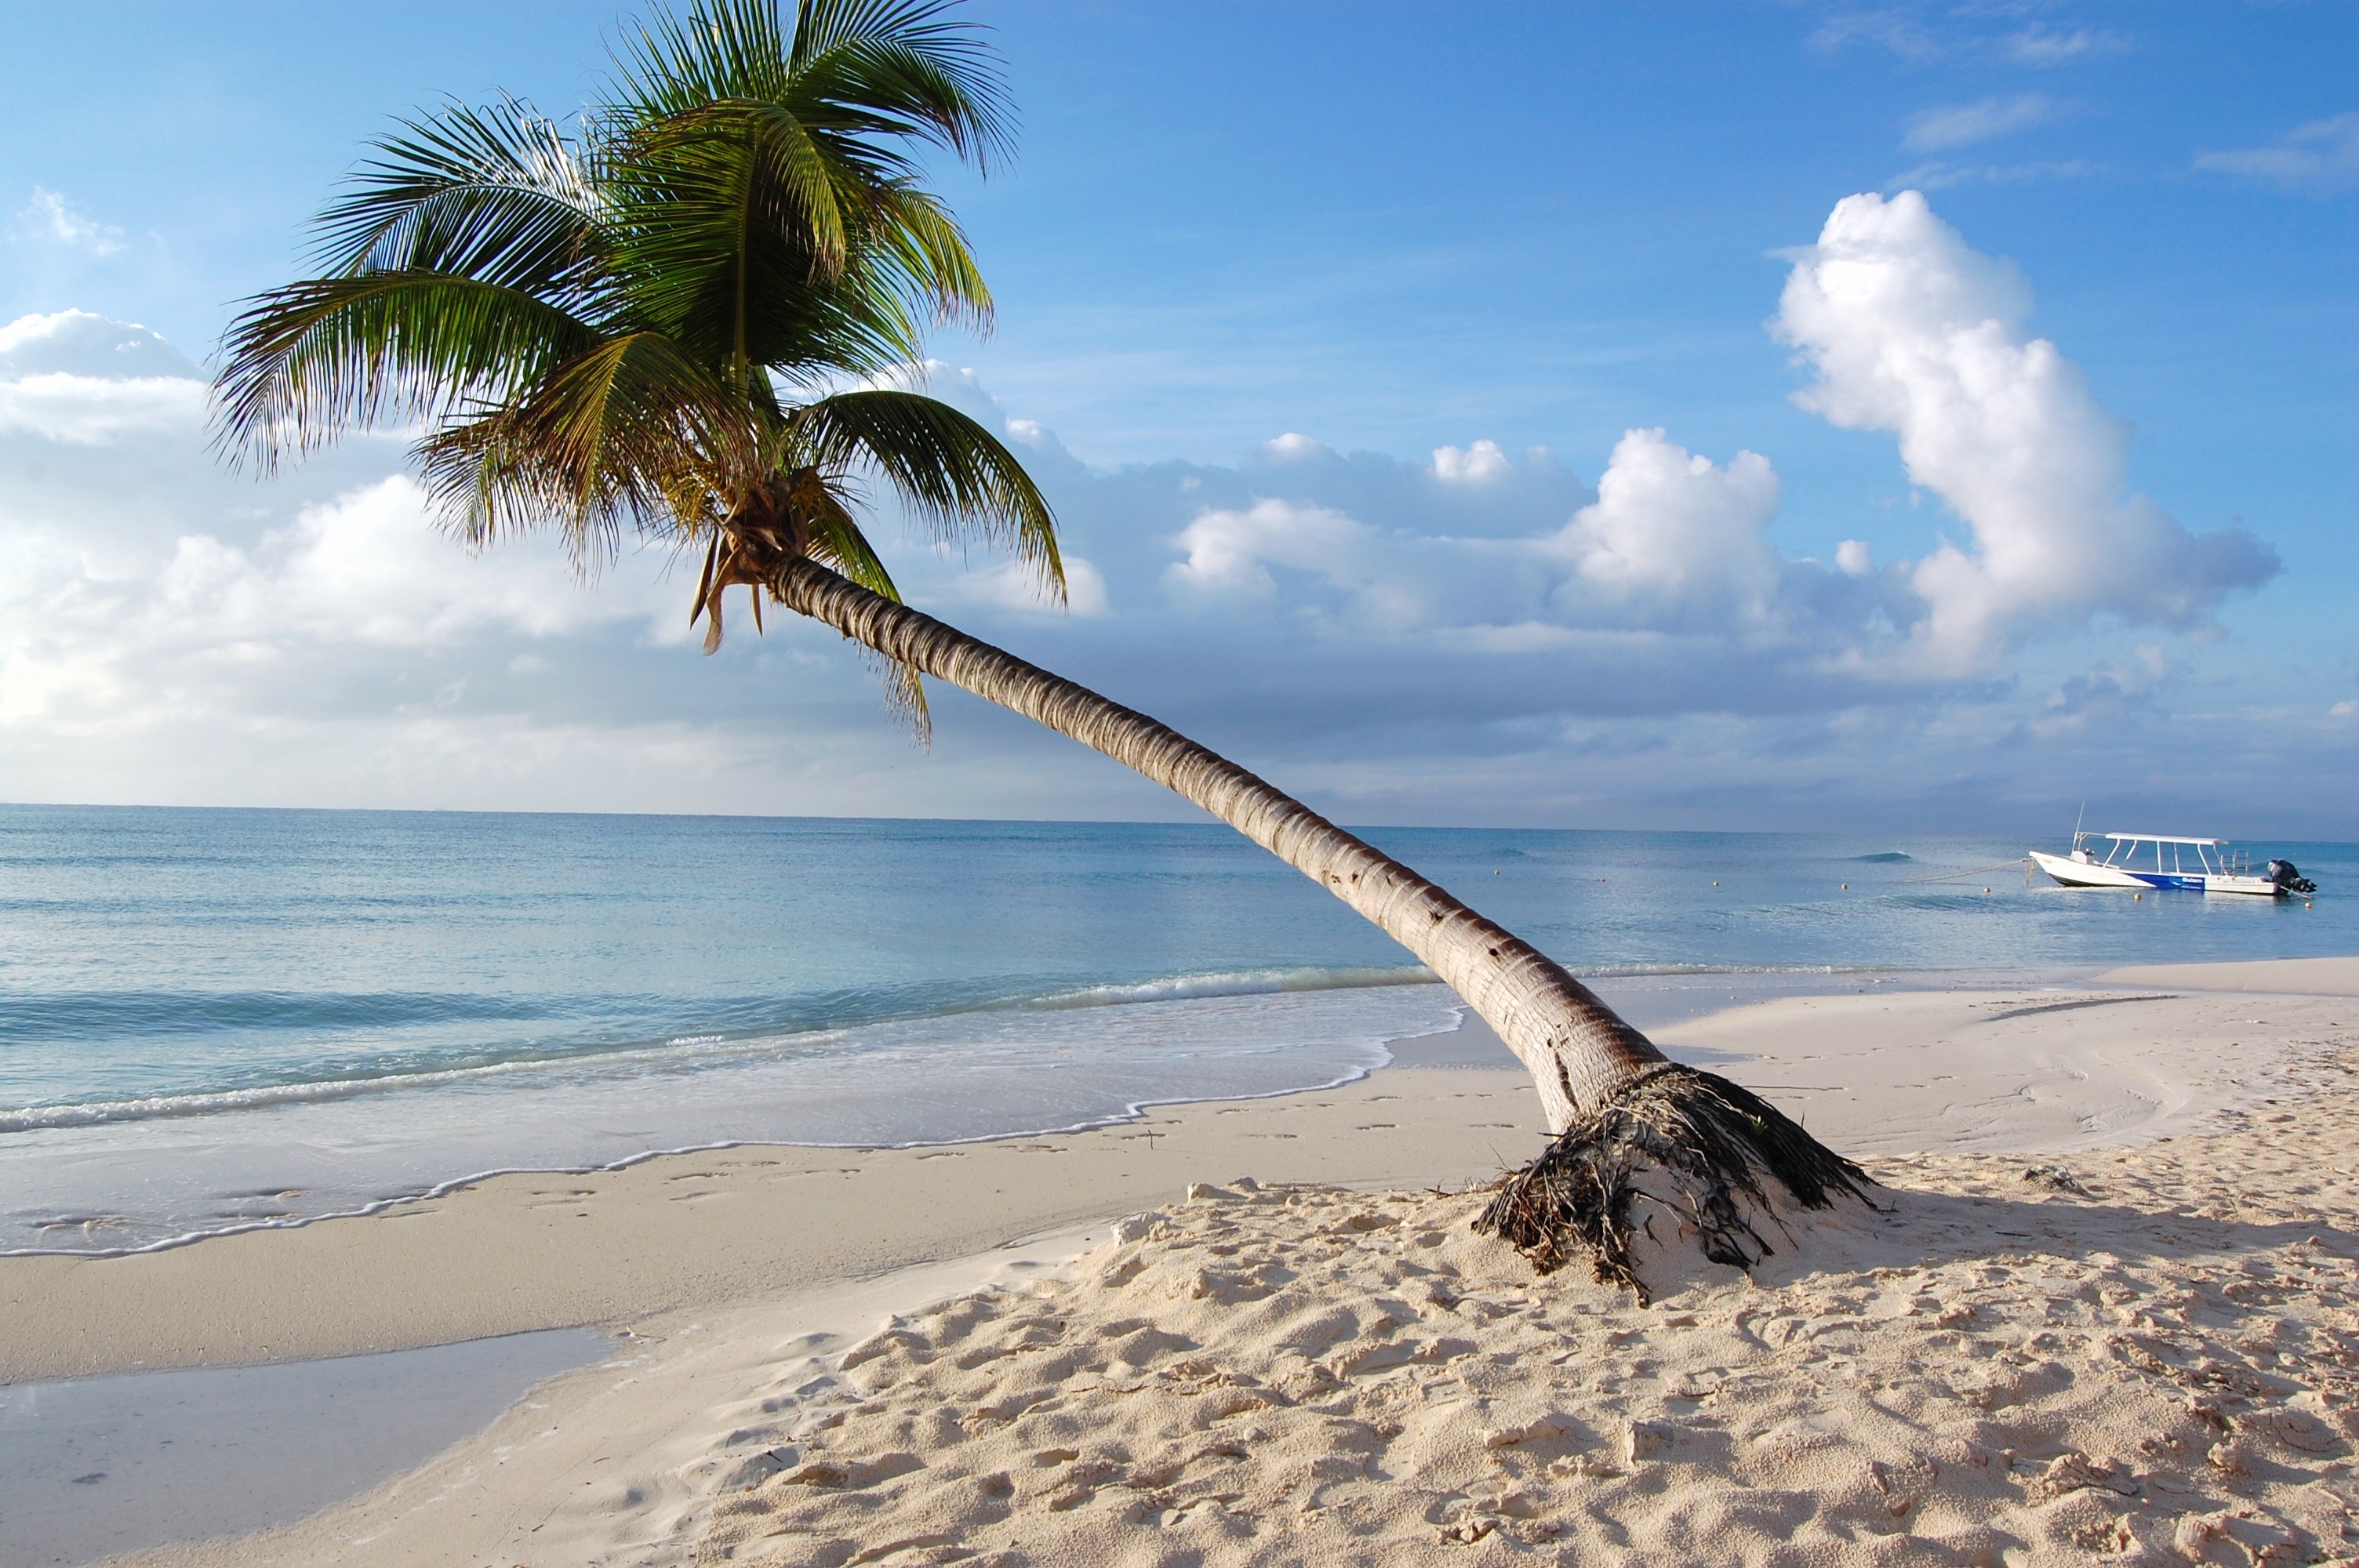 Windows Backgrounds beach, nature, palm, tropics, maldives